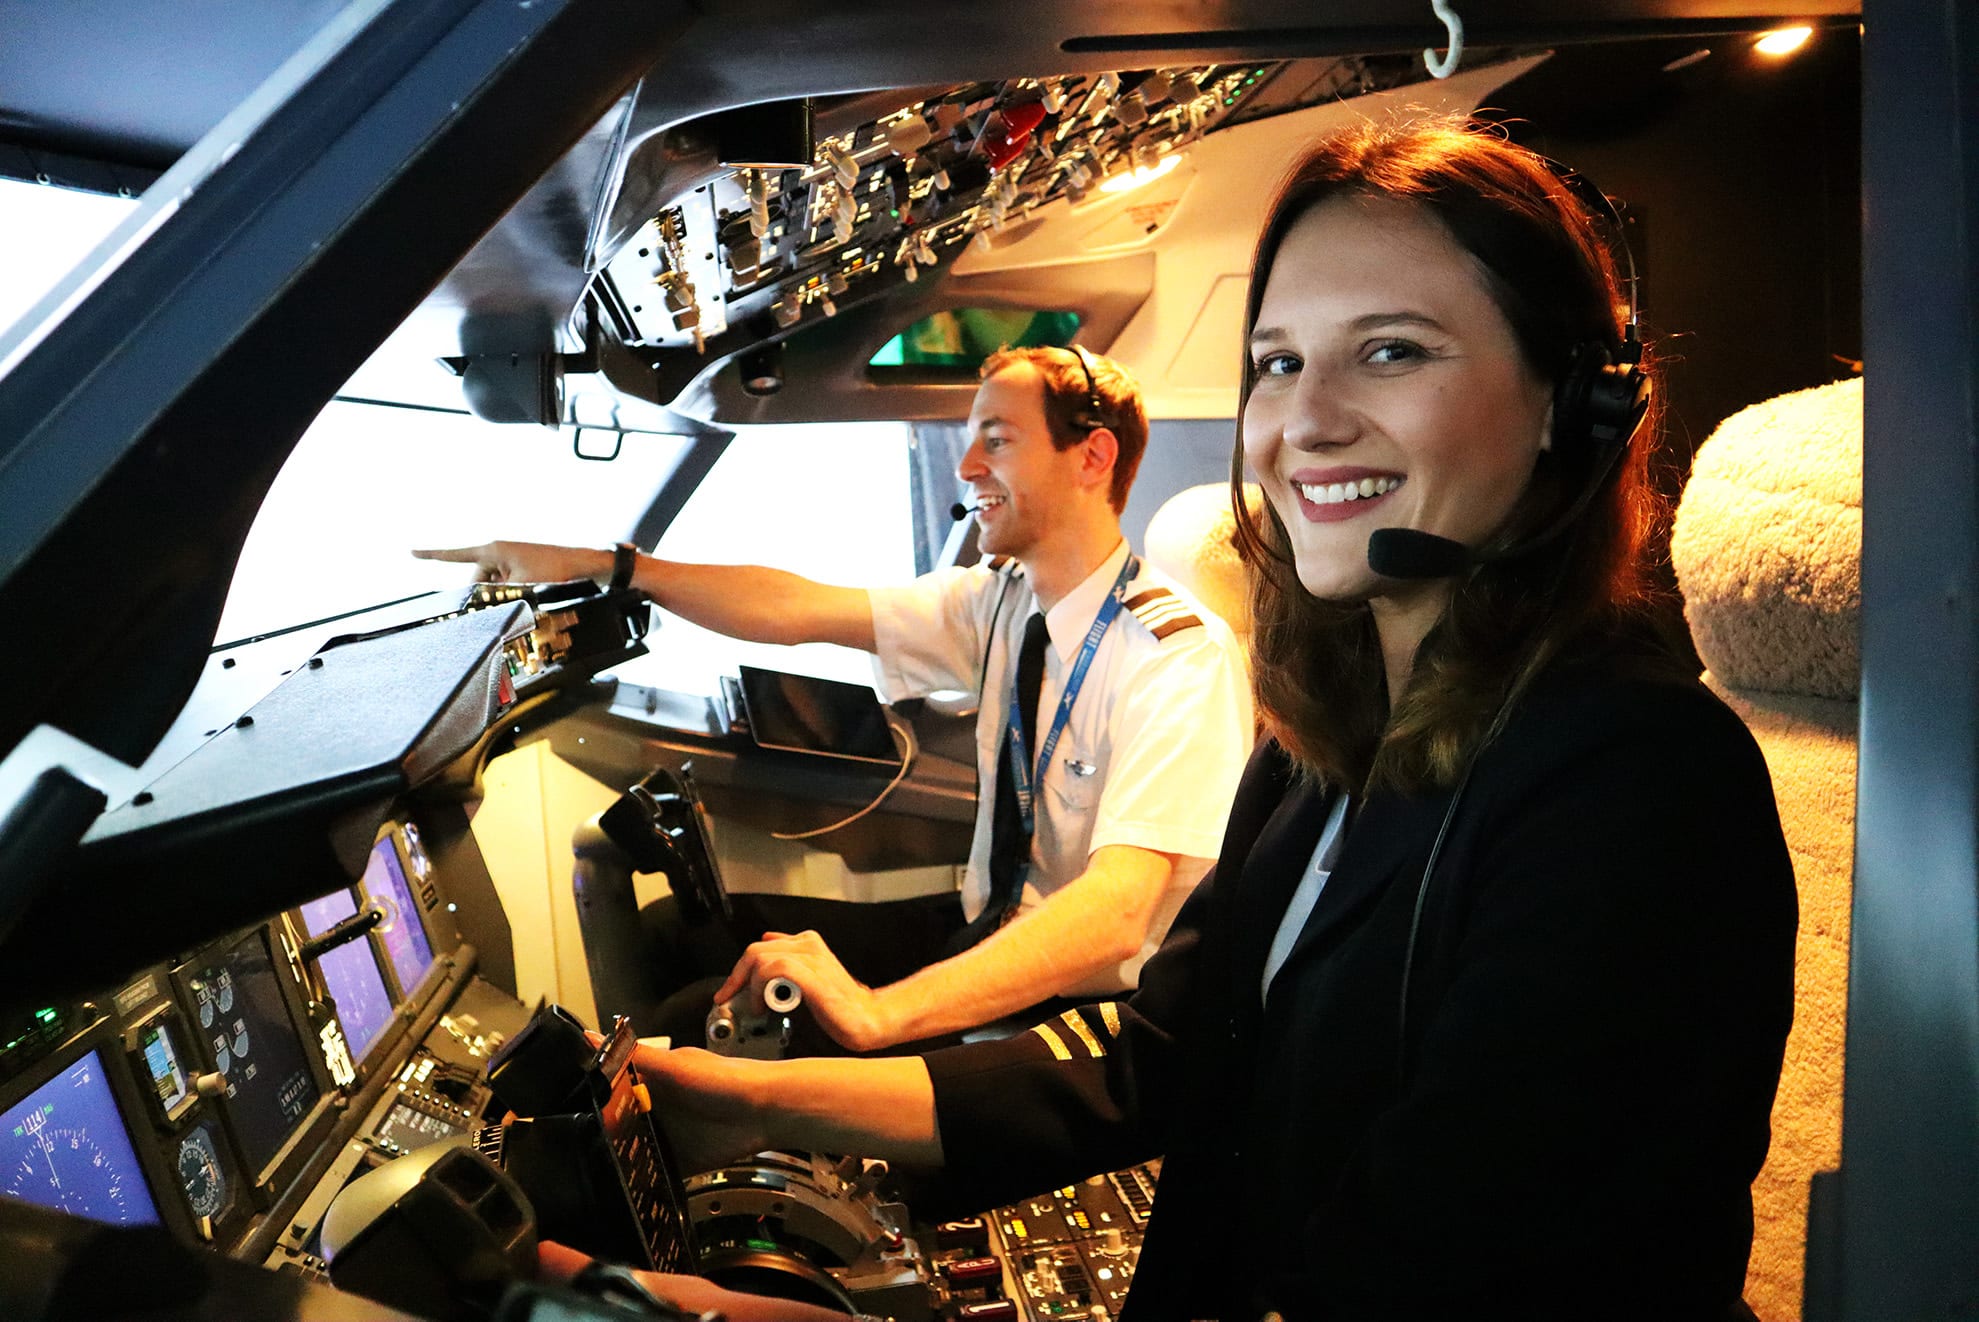 Boeing 737 Flight Simulator, 60 Minutes - Parafield, Adelaide